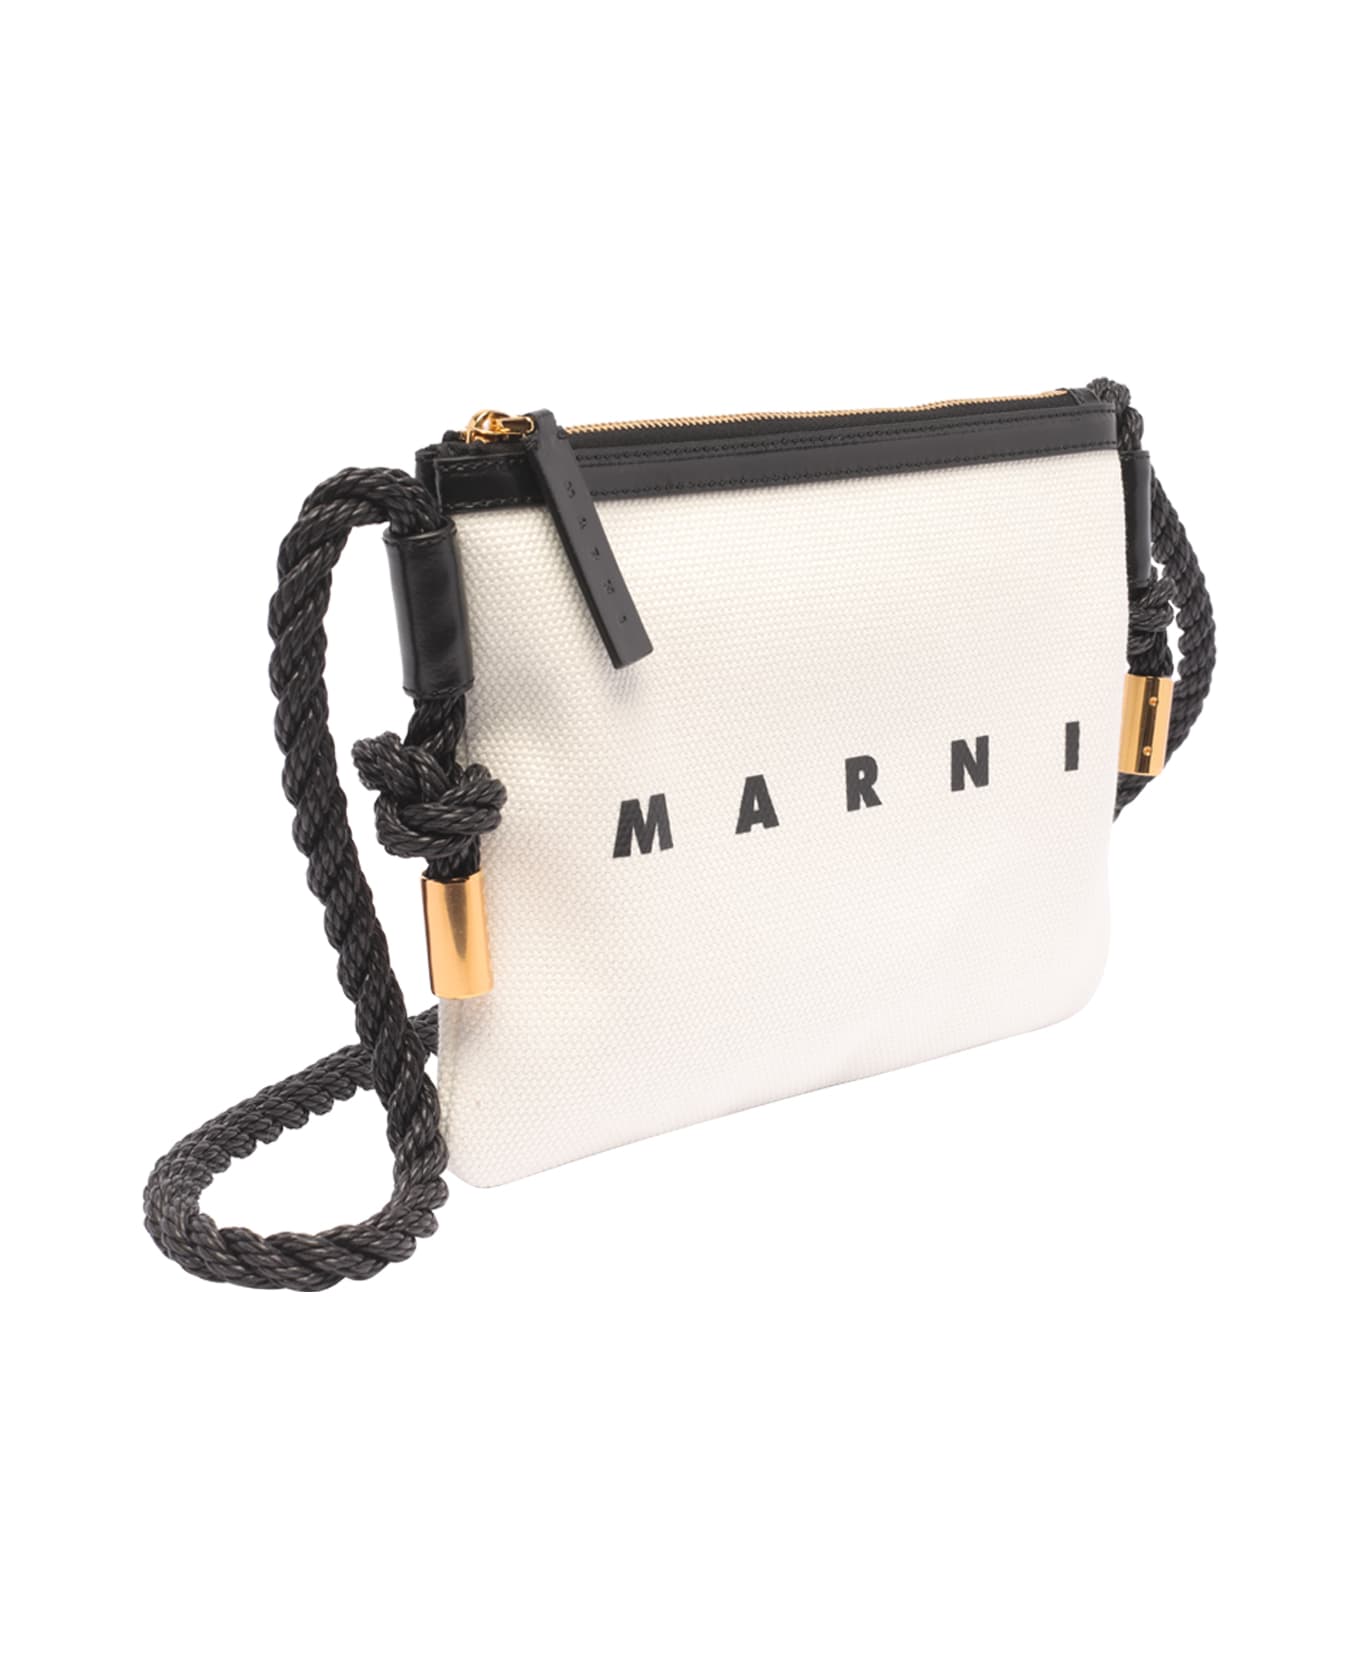 Marni Marcel Summer Bag - Bianco/nero